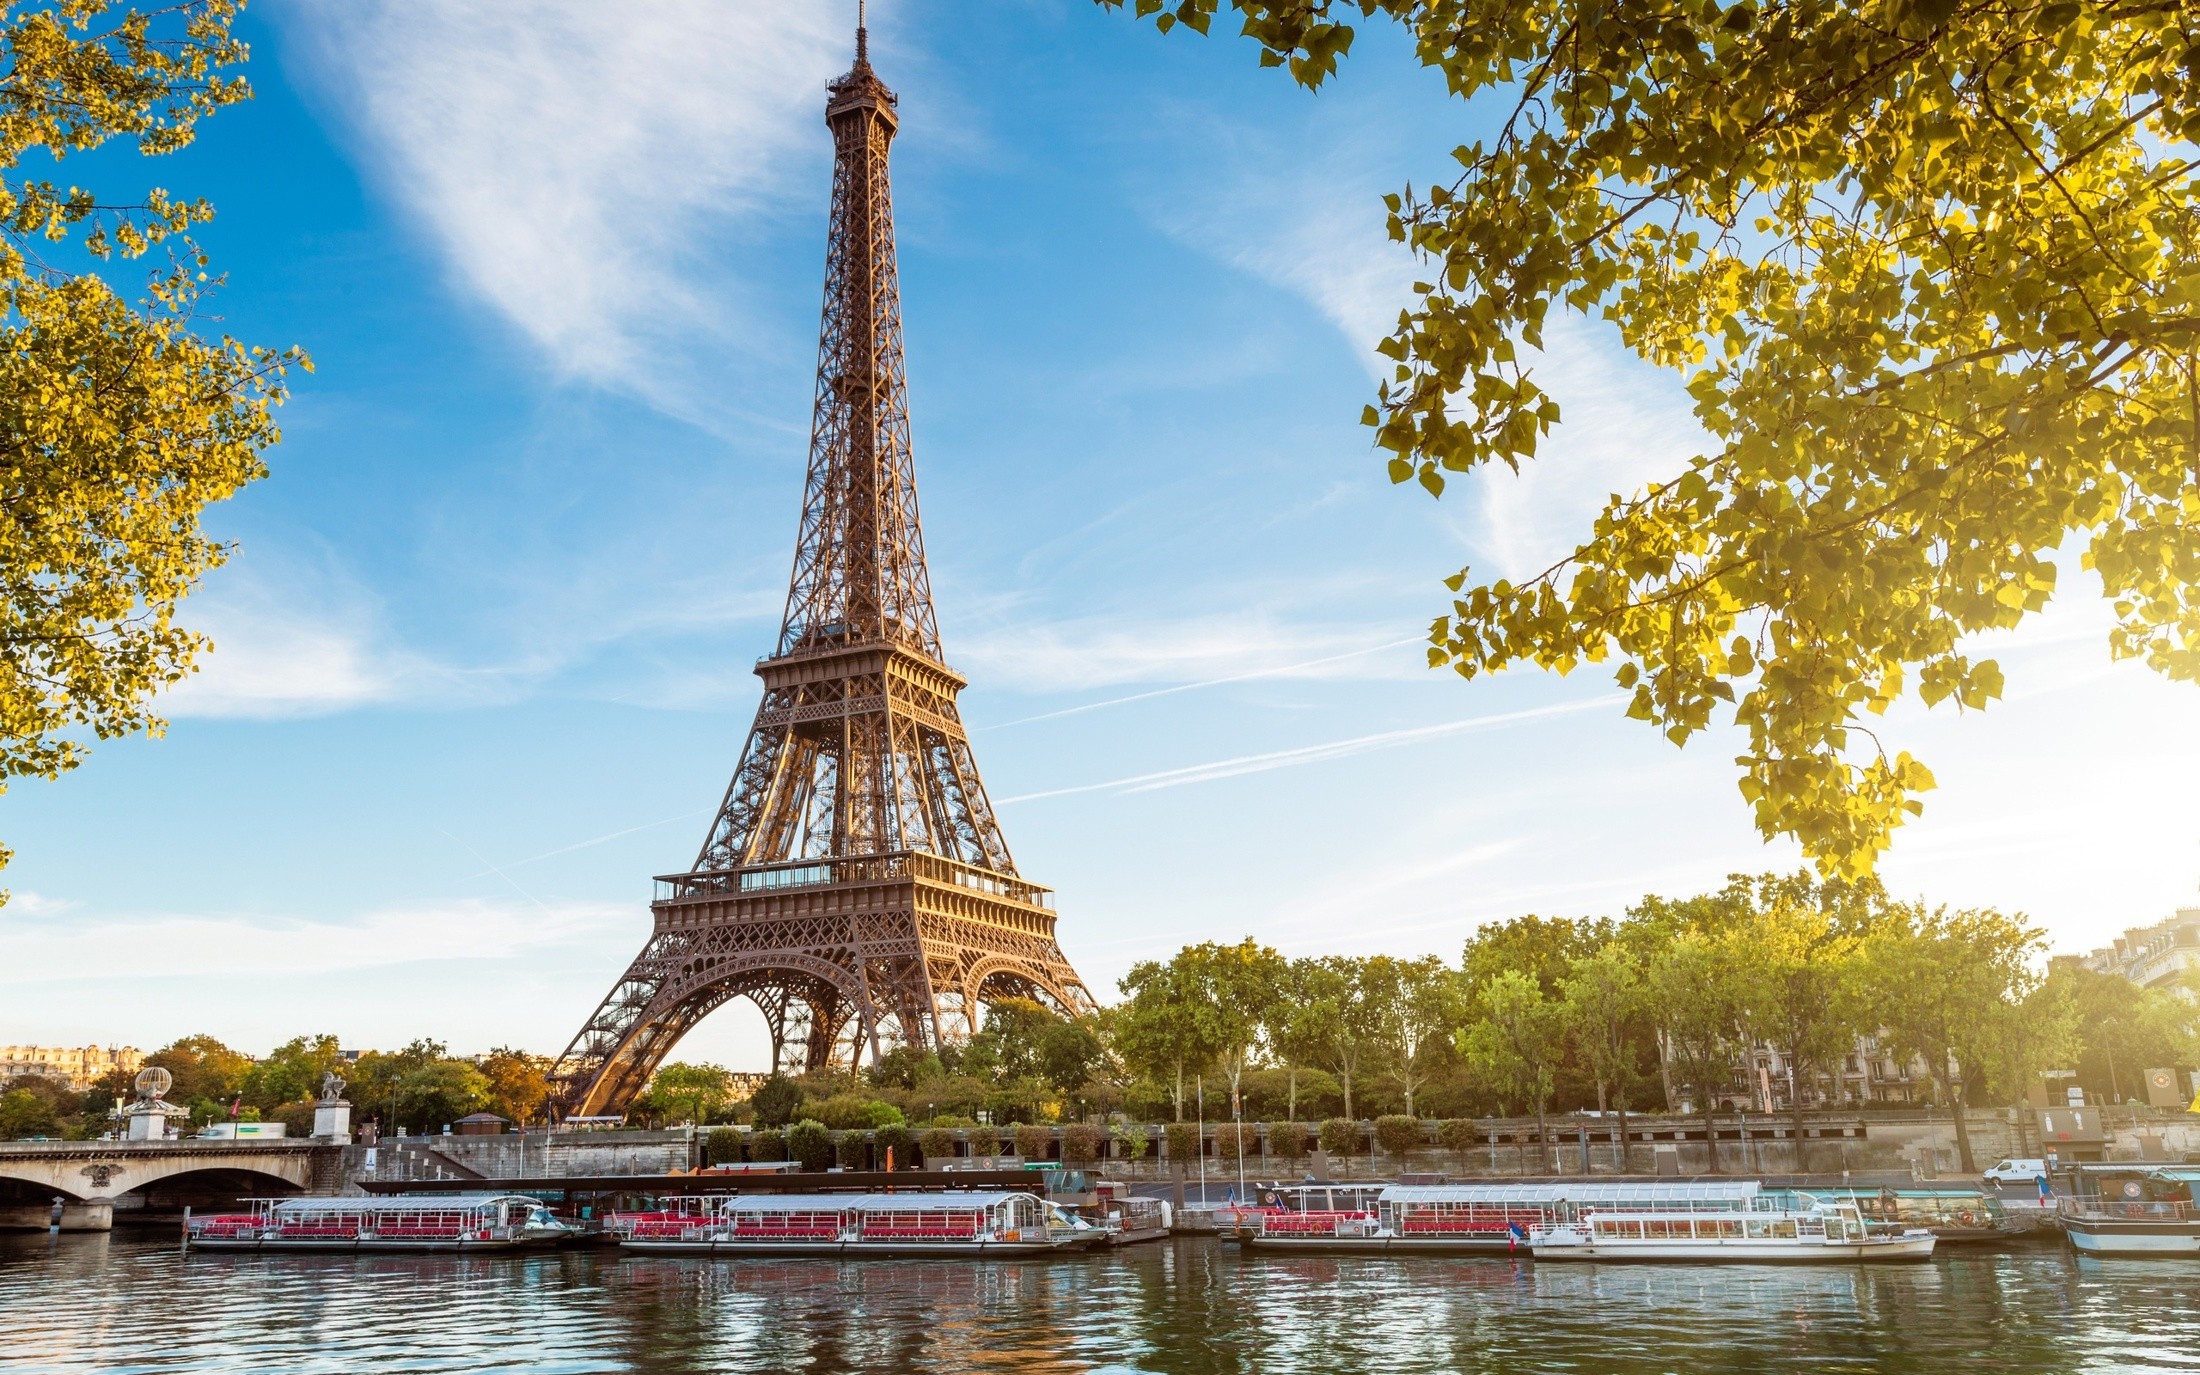 Eiffel Tower Paris France Wallpapers Hd Desktop And Mobile Backgrounds